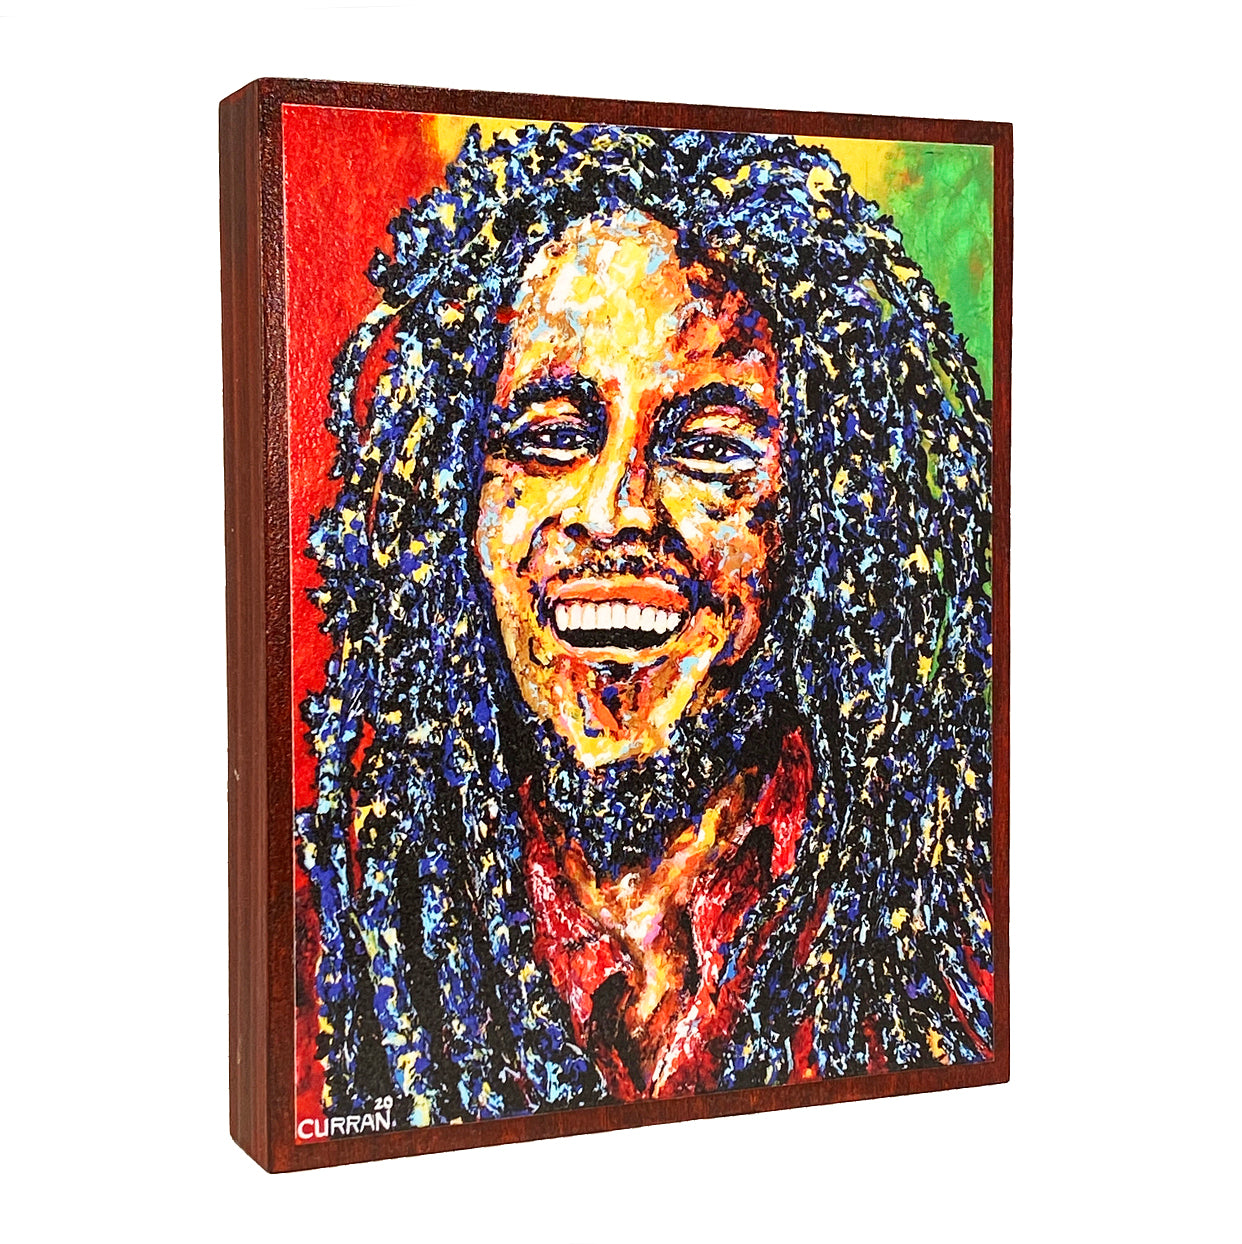 Marley on Wood Panel (Limited Edition) - Daniel Curran Art